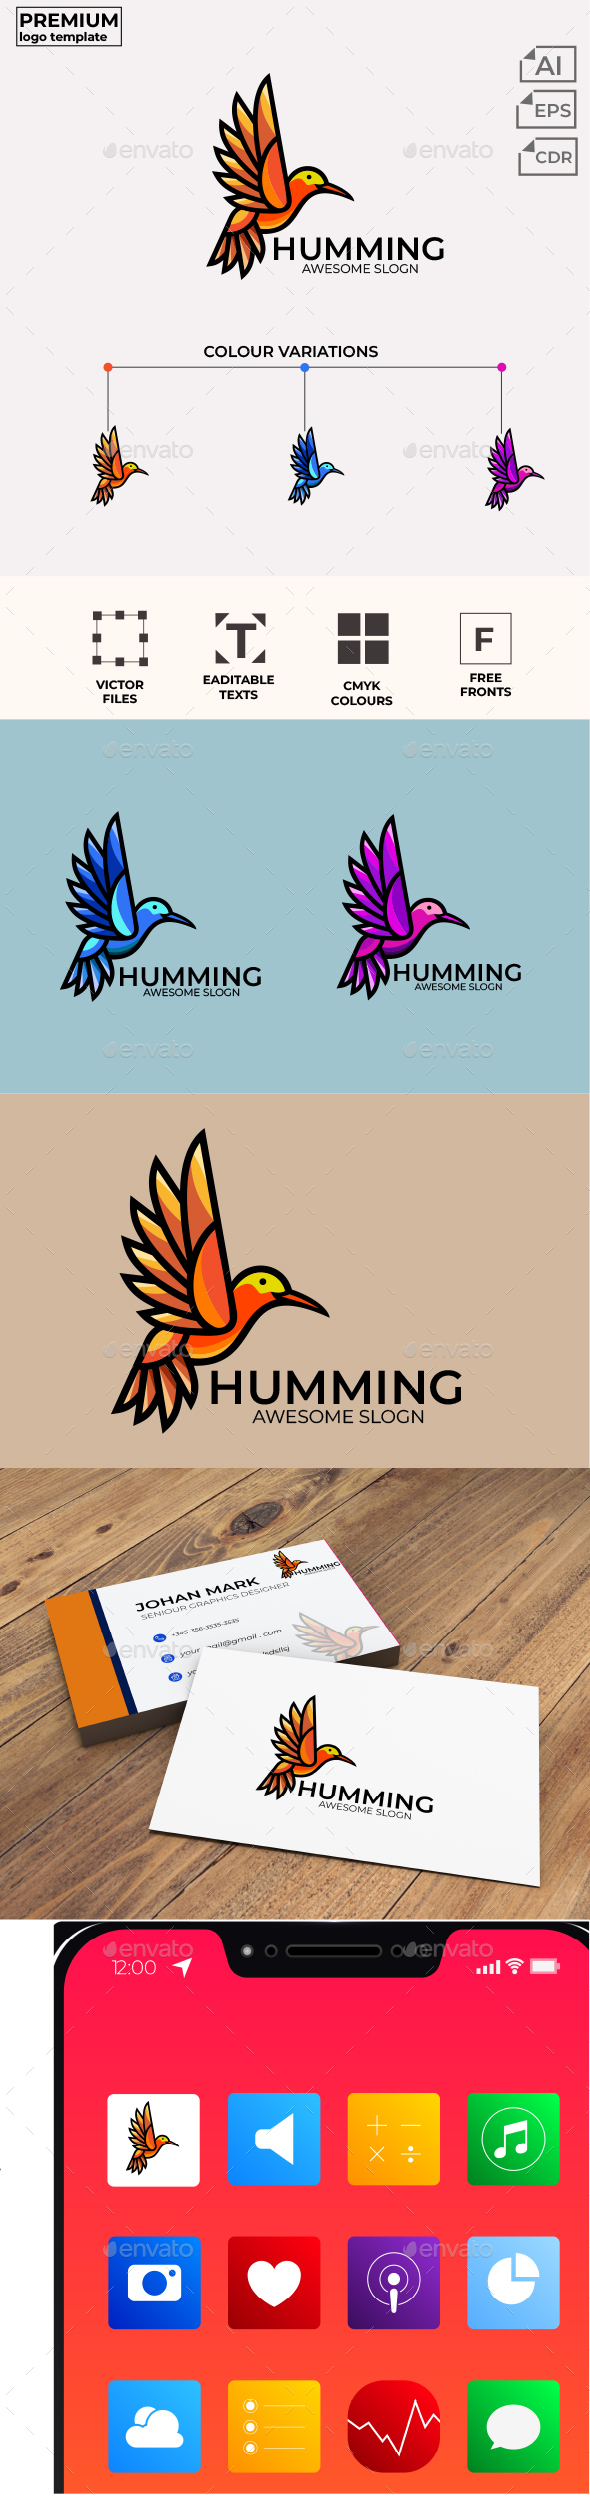 HUMMING BIRD LOGO DESIGN